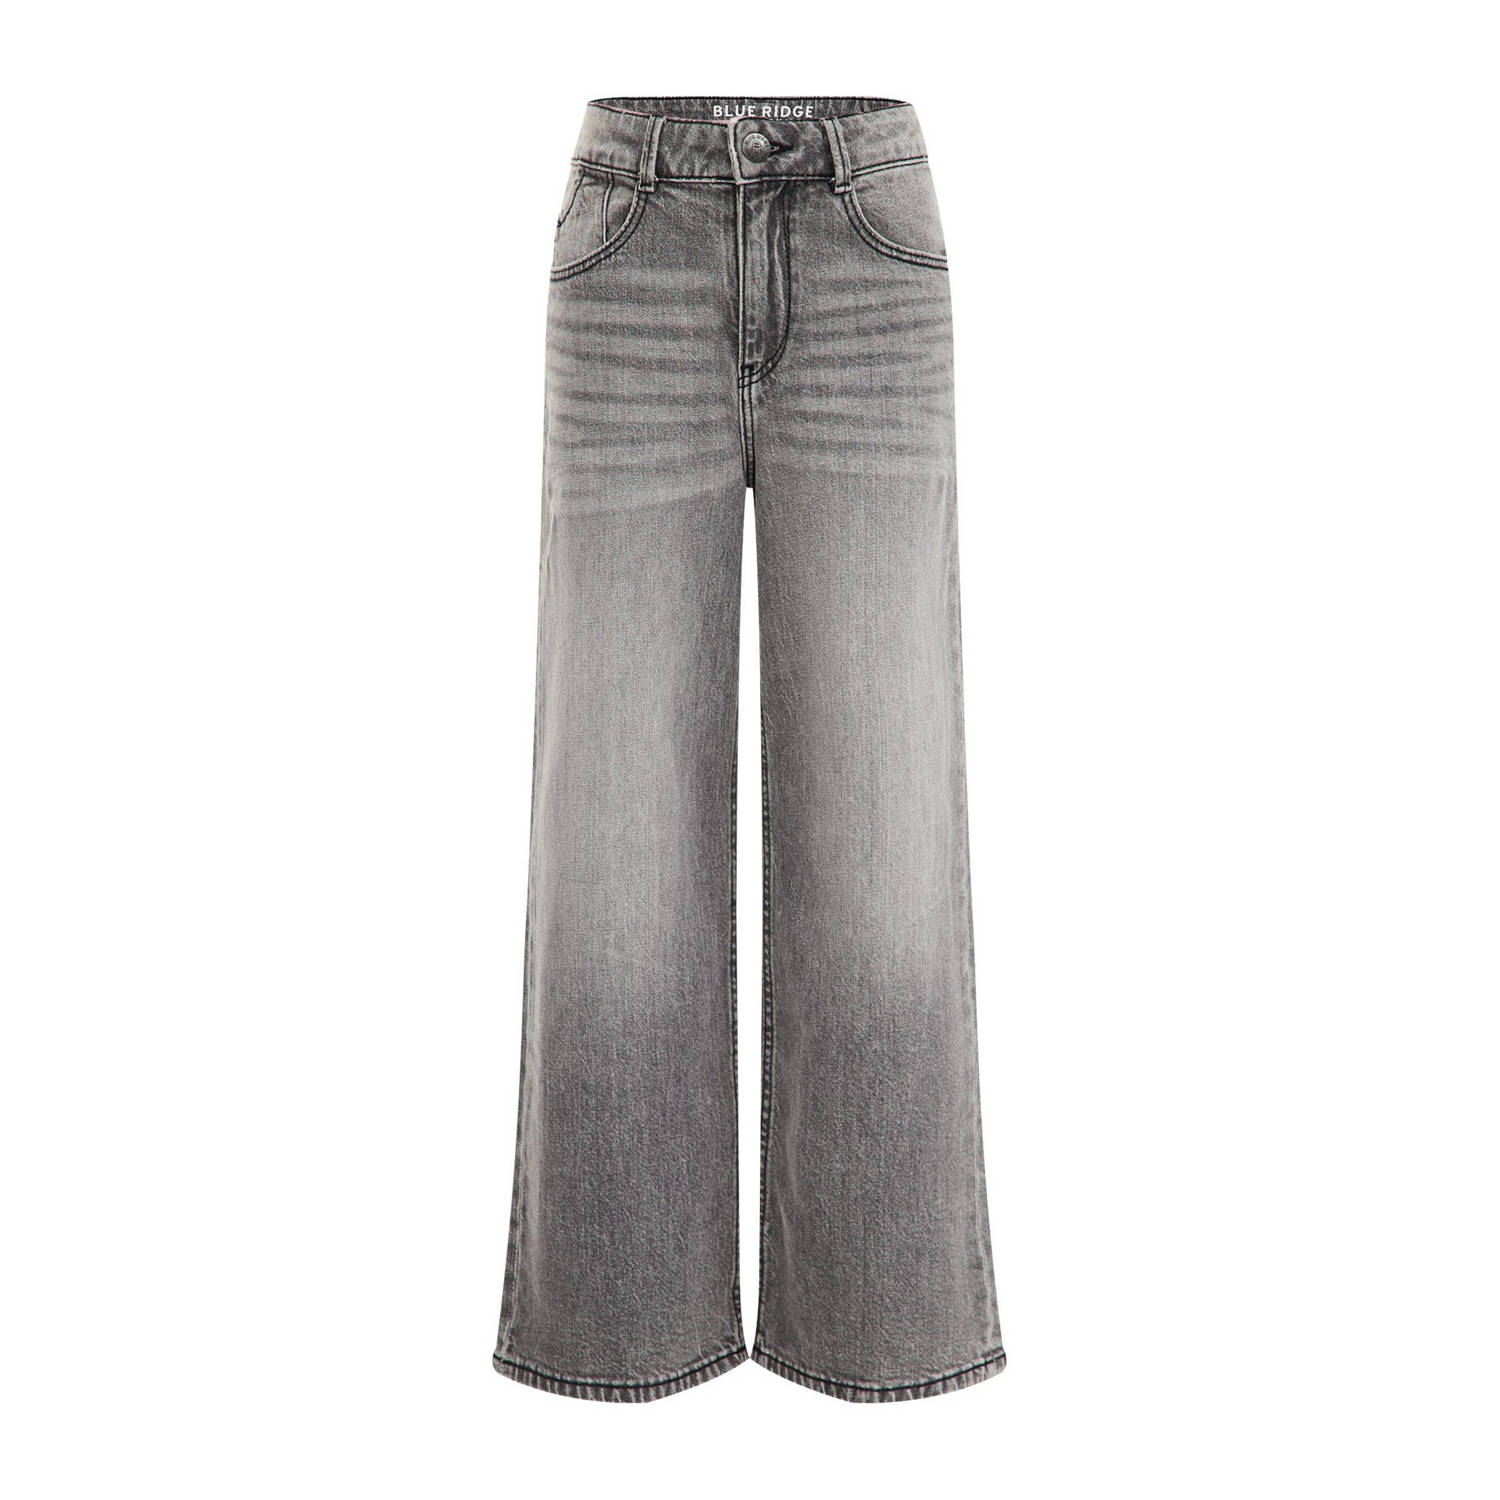 WE Fashion Blue Ridge high waist wide leg jeans grey denim